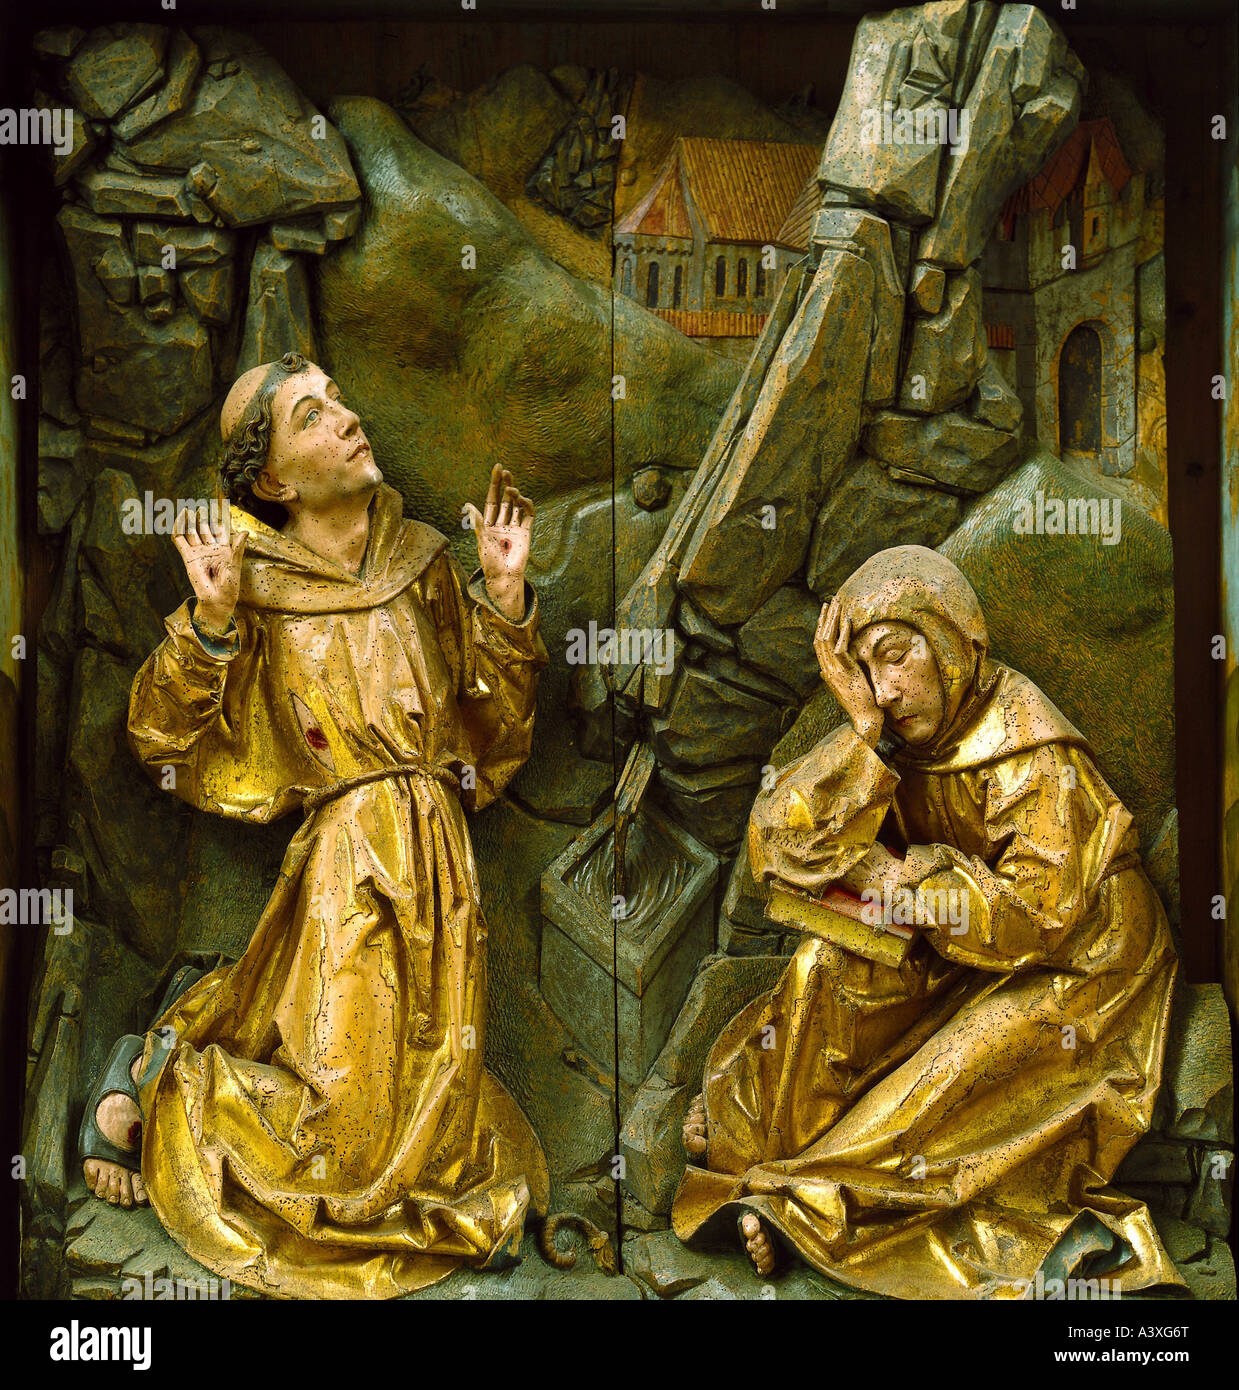 Bildende Kunst, Riemenschneider, Tilman, (um 1460 - 7.7.1531), Altar des Heiligen Franziskus, Klangskulptur, Holz, um 1480, St. Jakob, Stockfoto